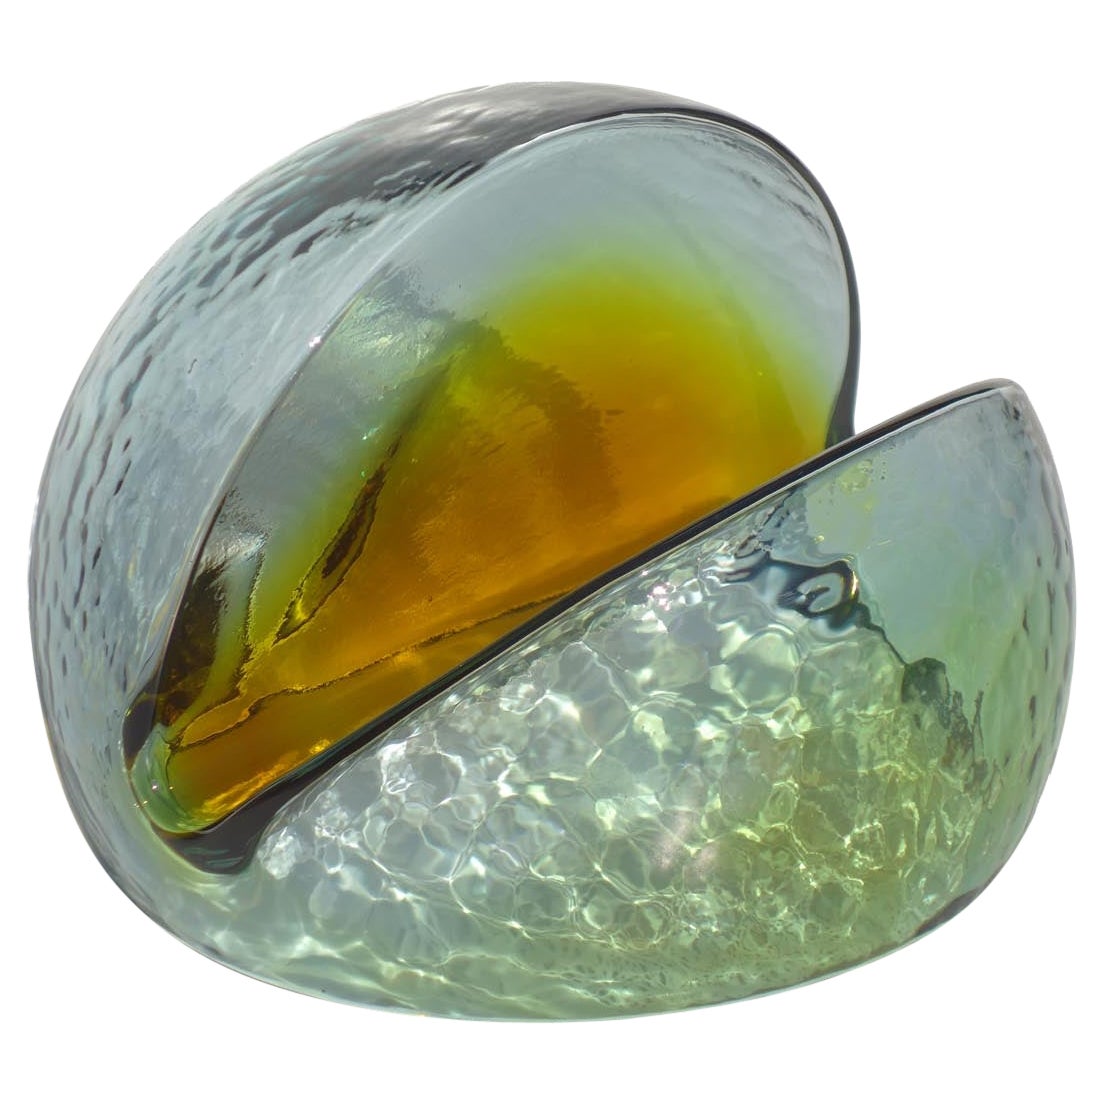 1970 Toni Zuccheri Veart Murano Italian Design Glass Sculpture